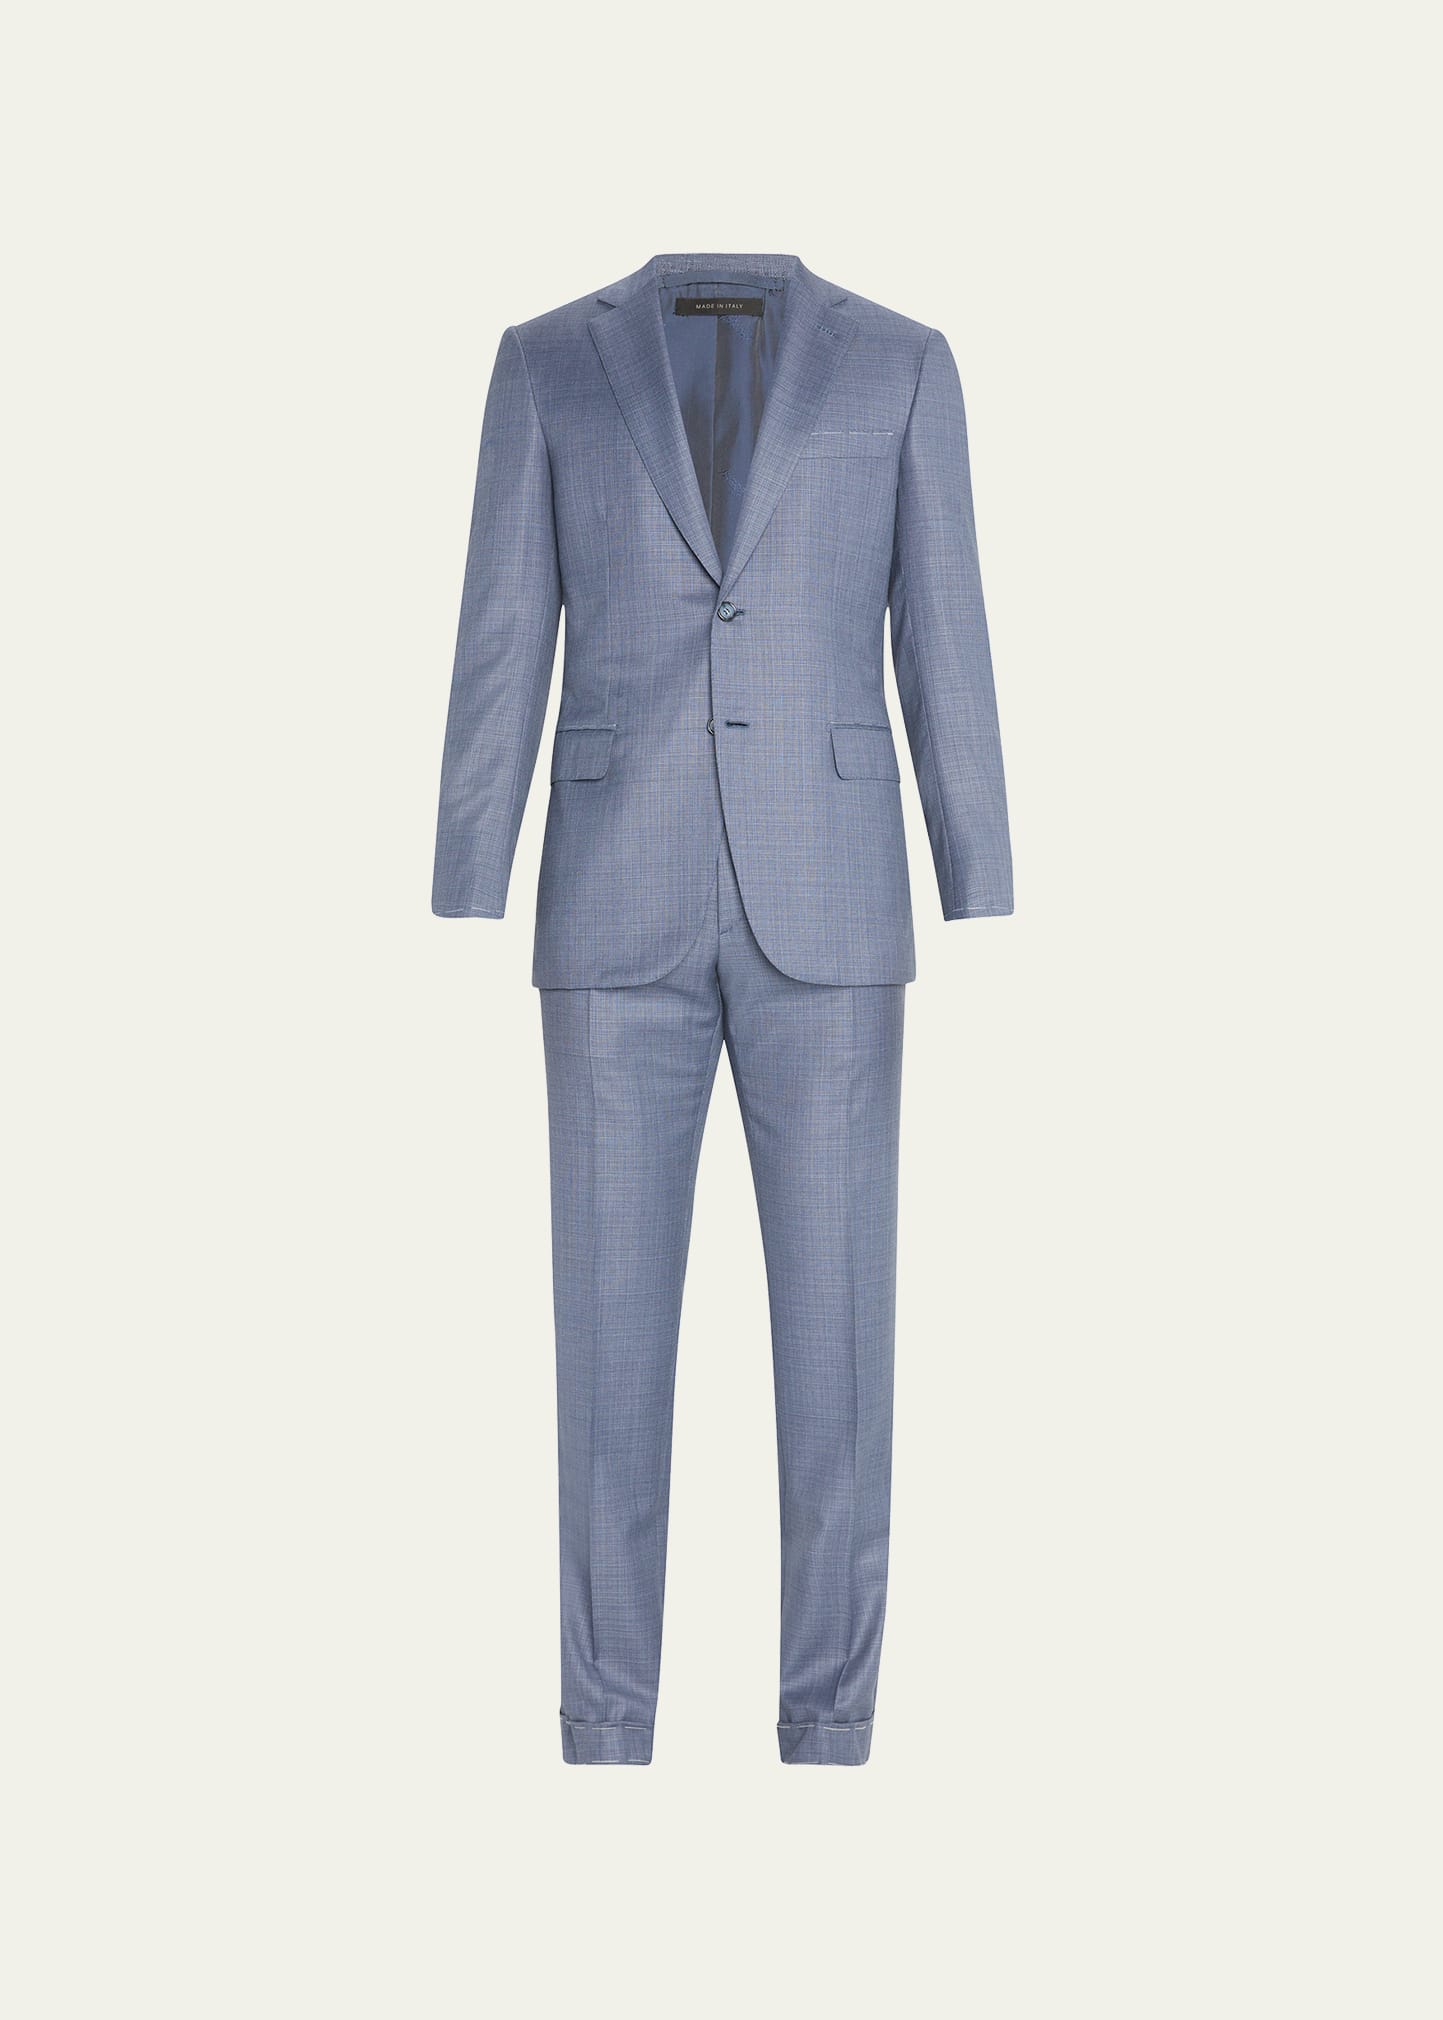 Brioni Men's Textured Solid Wool Suit In Blue